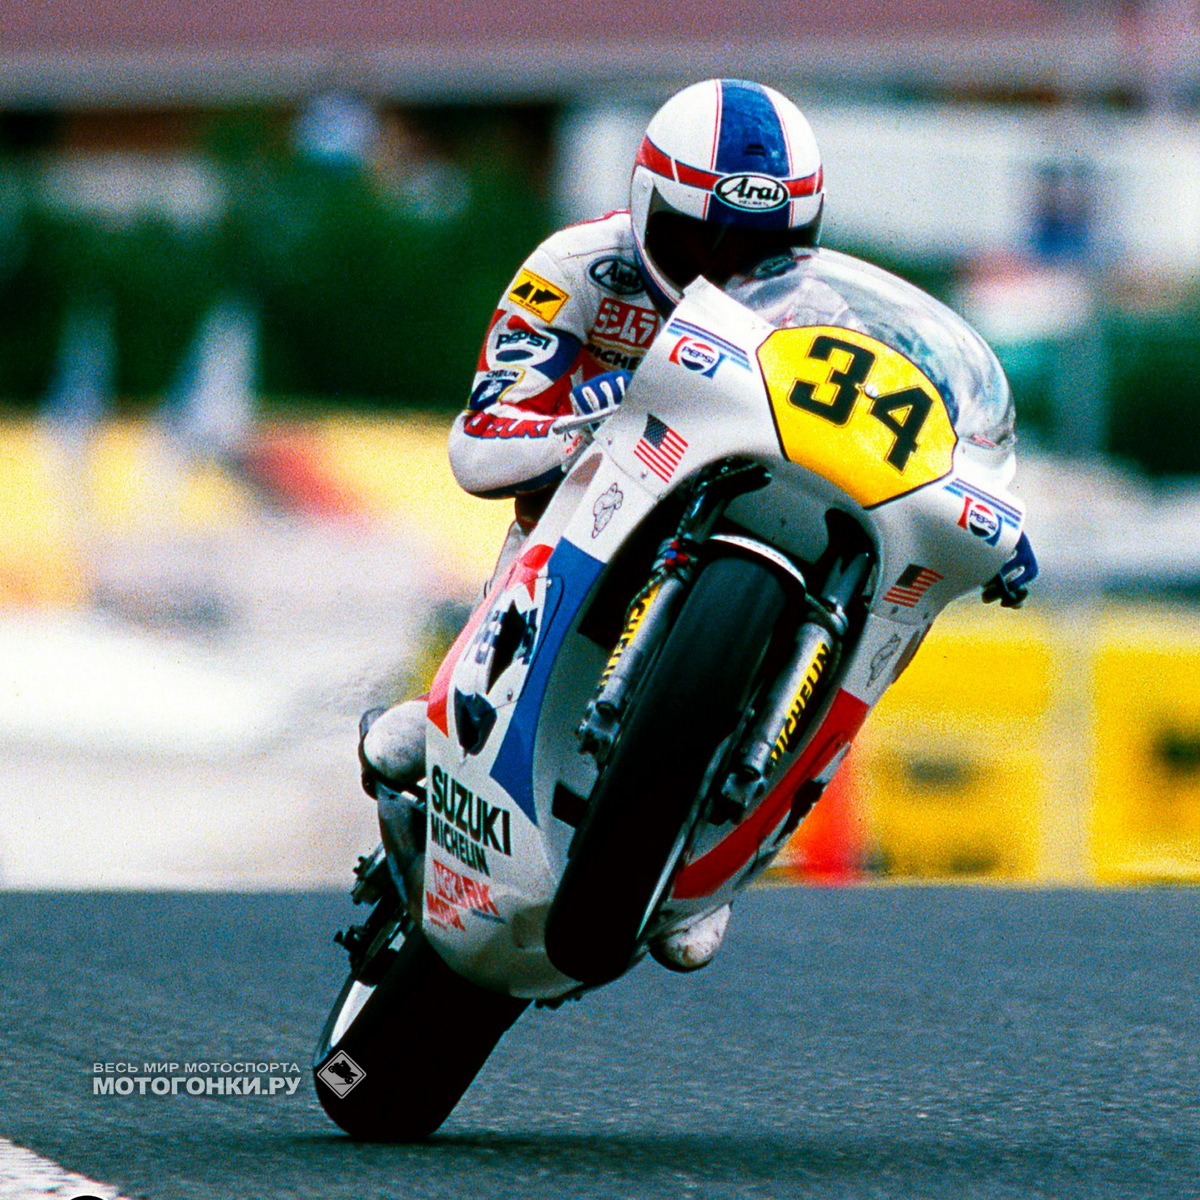 Кевин Шванц, чемпион MotoGP 1993 года